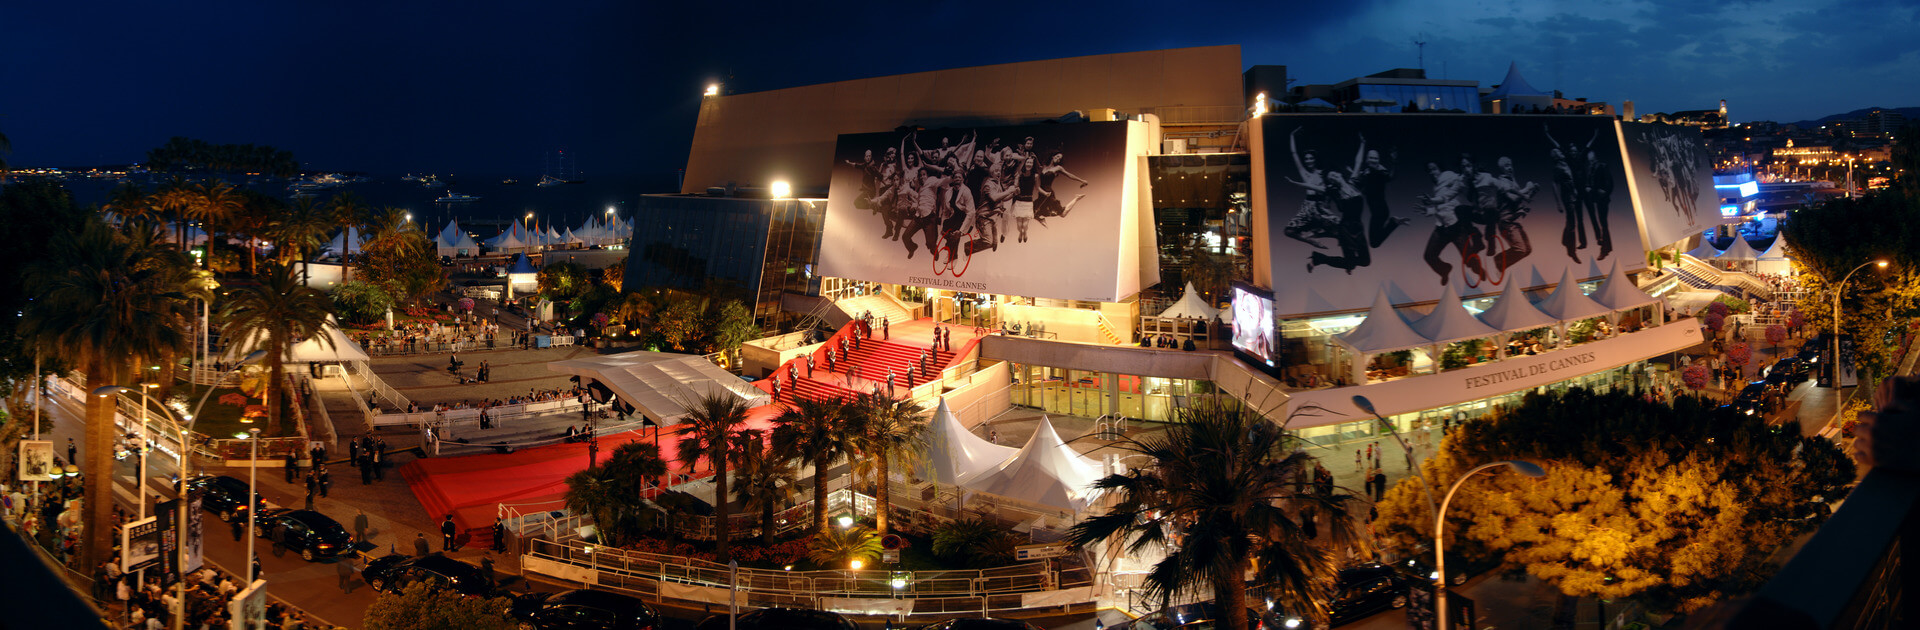 Panorama of Le Palais des Festivals during the 60th Annual International Film Festival de Cannes.